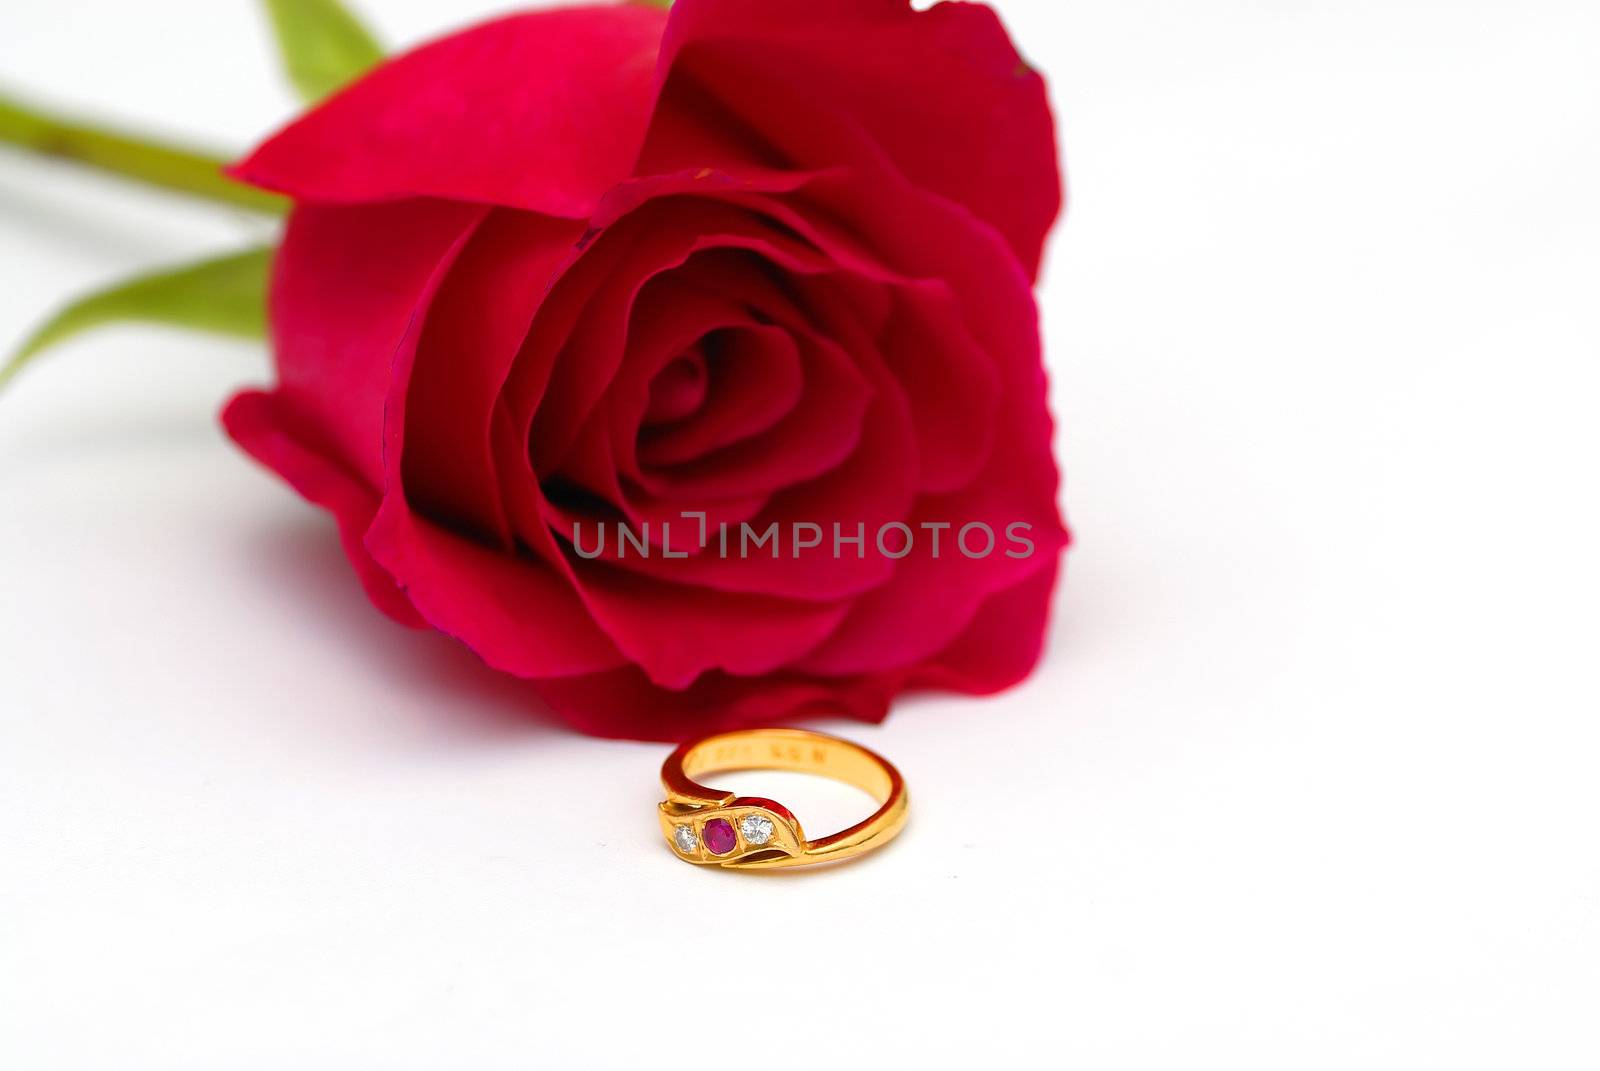 Beautiful Diamond Ring in Red Rose